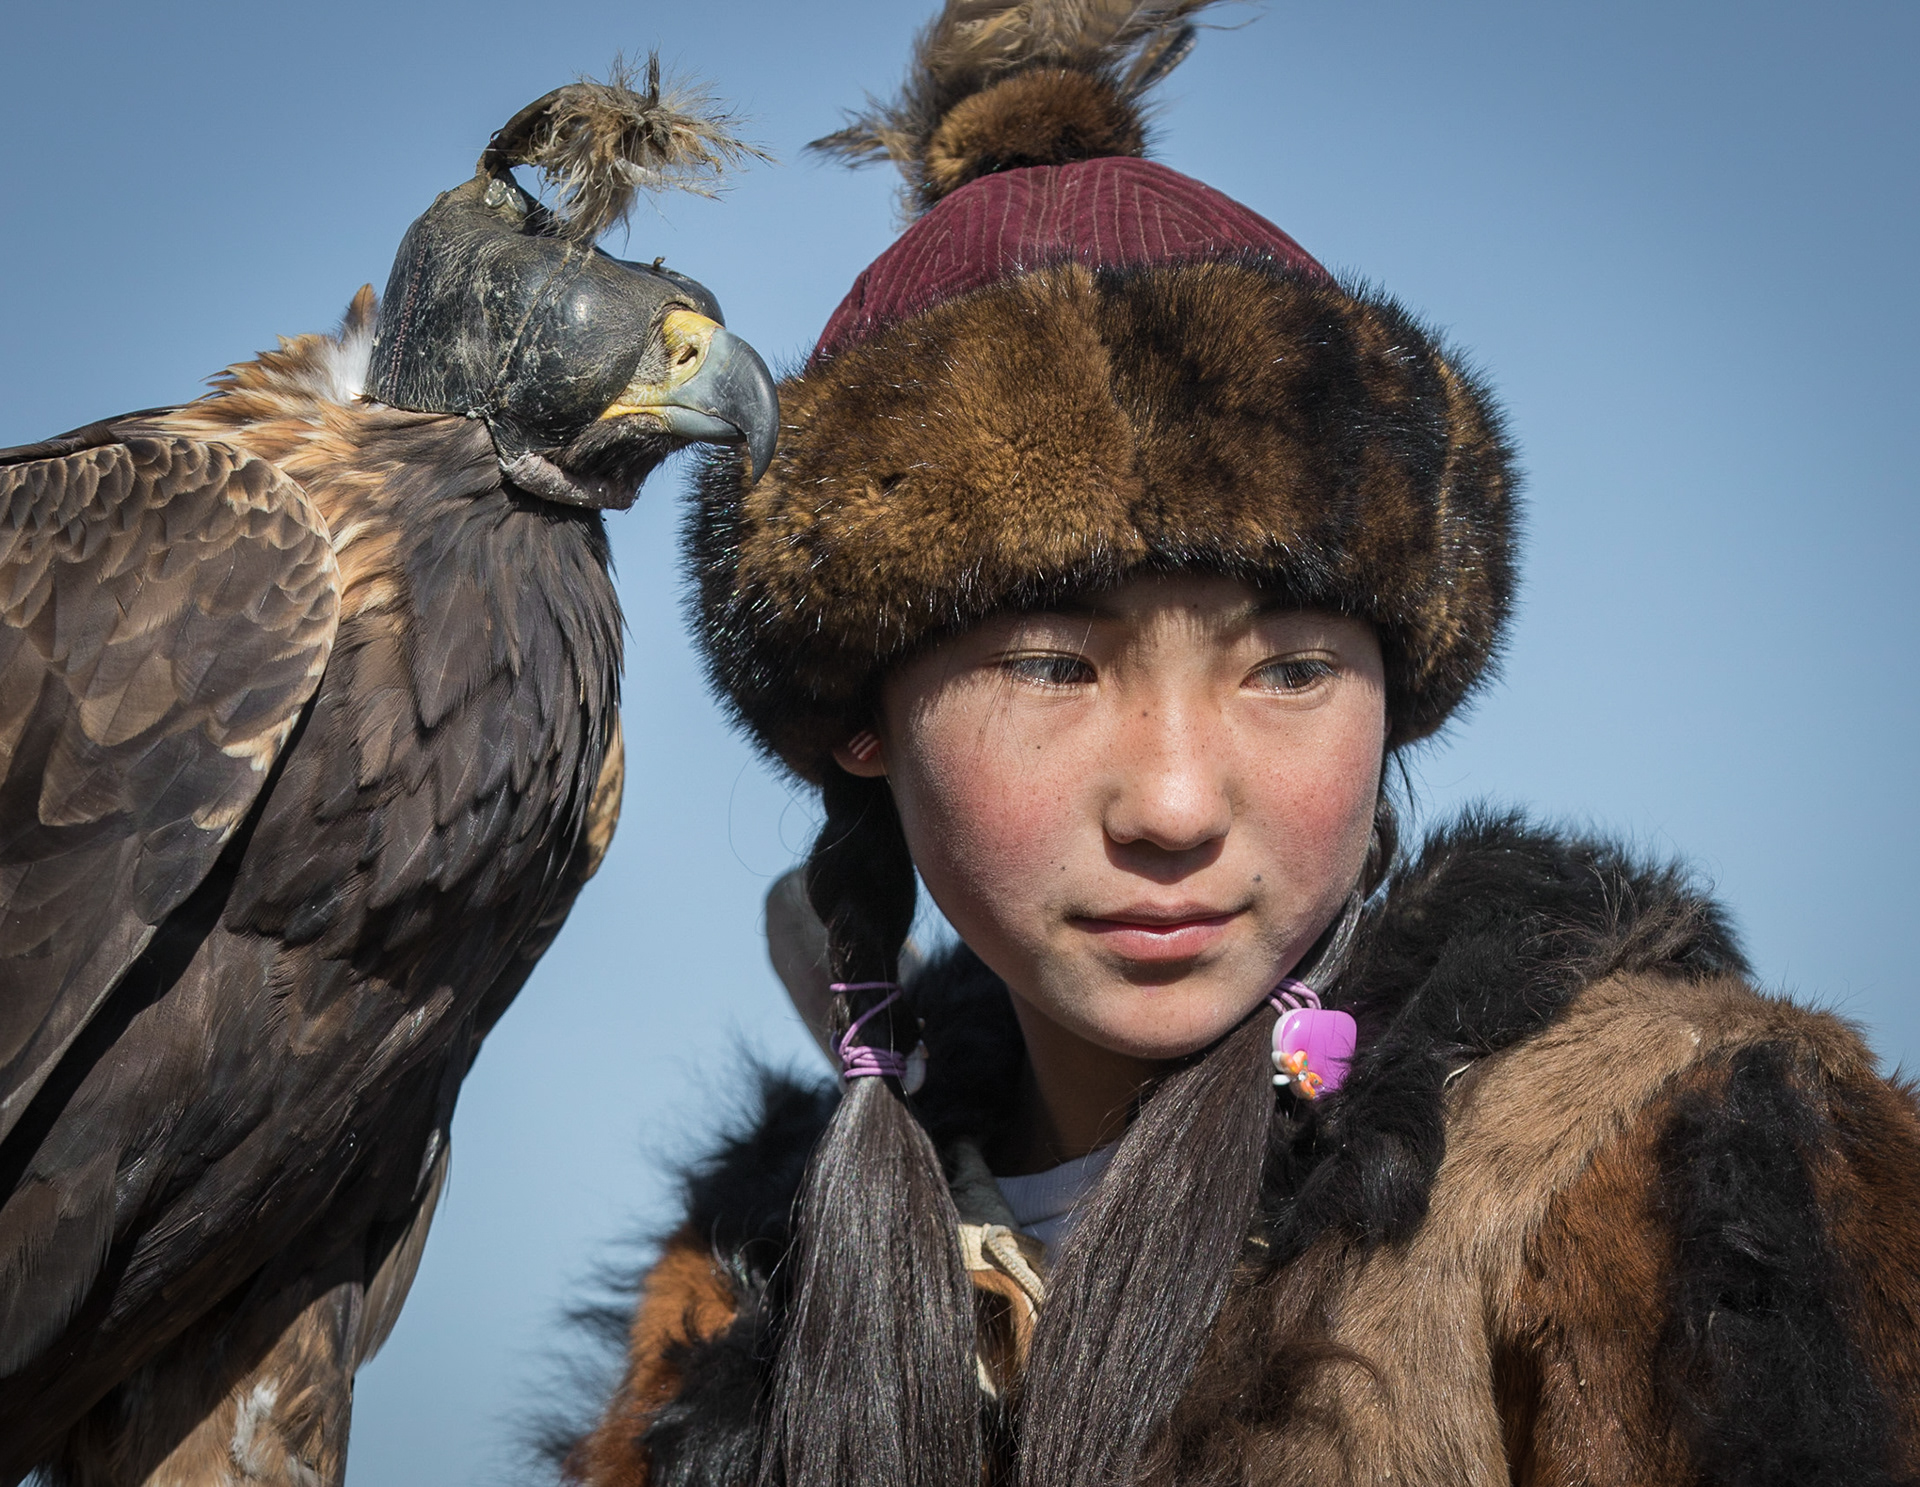 Photography by Eric Lynn - Eagle Hunters Festival, Mongolia